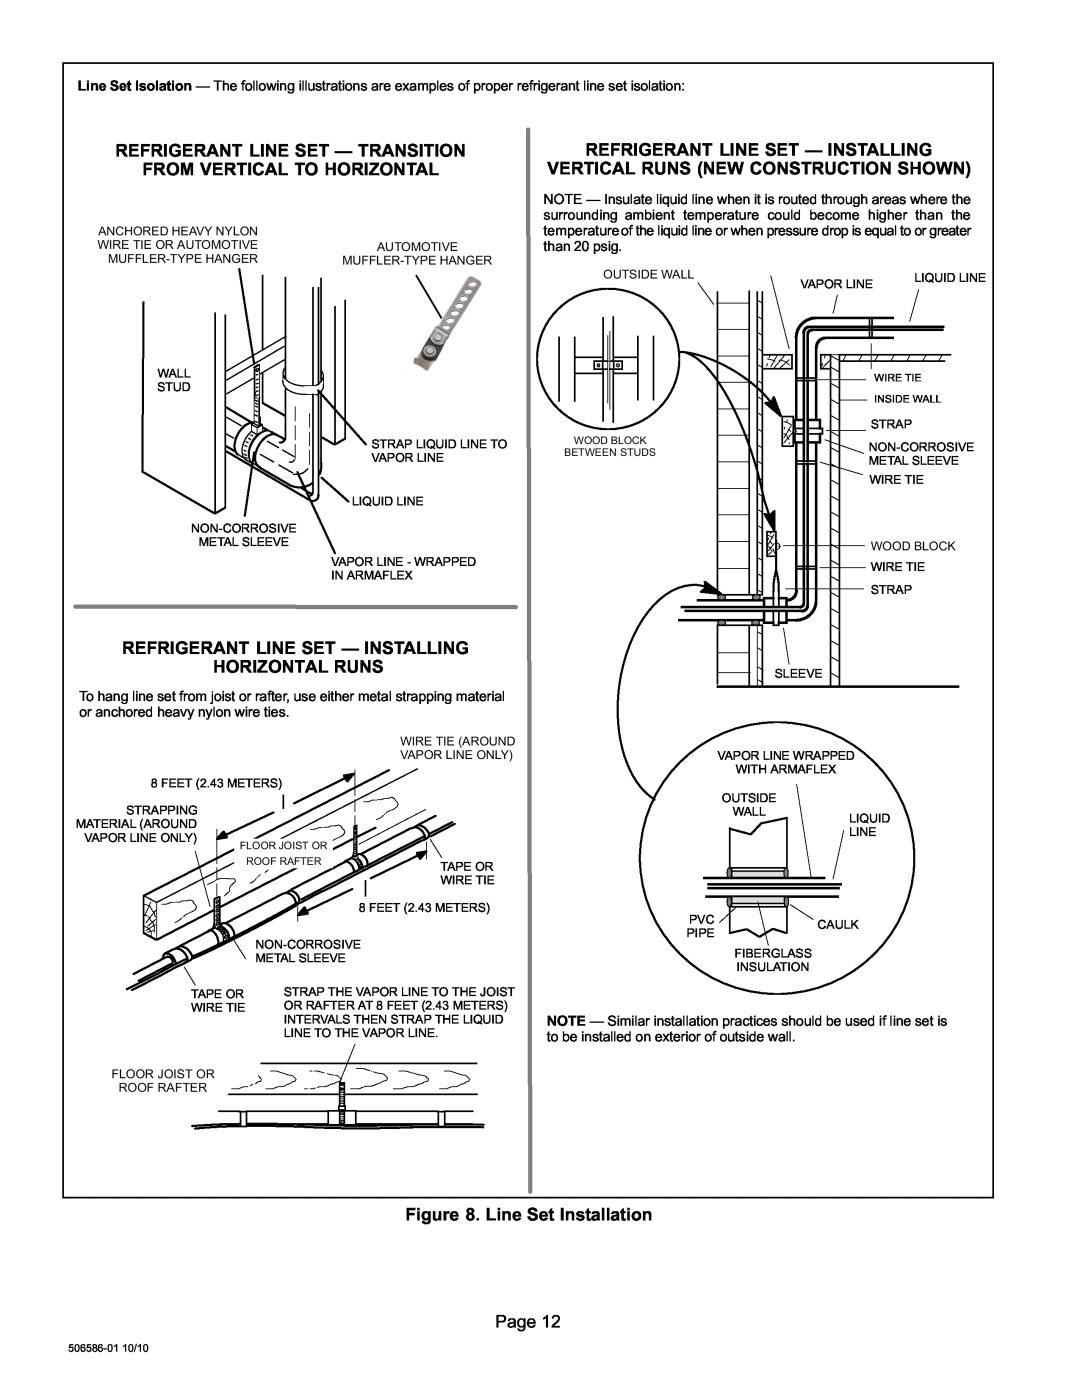 Lennox International Inc 506586-01 Refrigerant Line Set From Vertical To Horizontal, Line Set Installation Page 